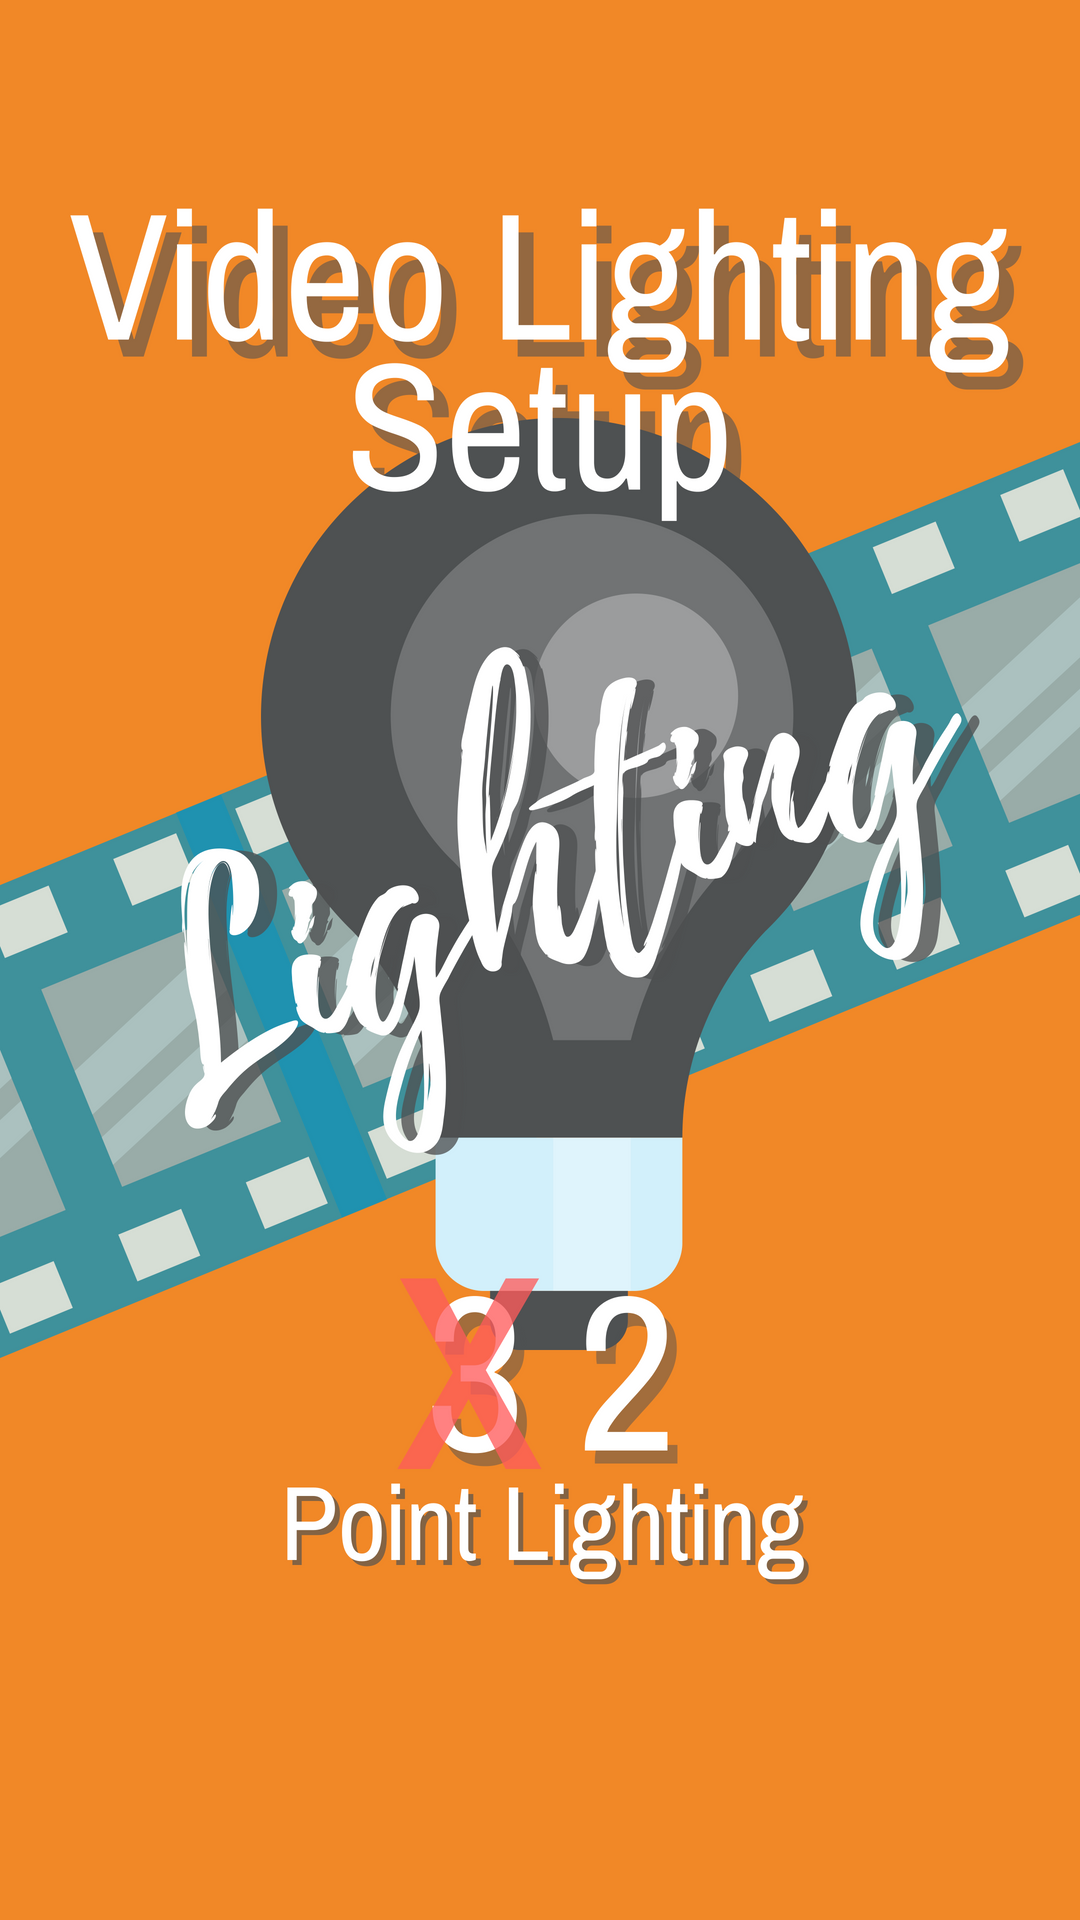 Video Lighting Setup - How To Combat Bad Lightingtus